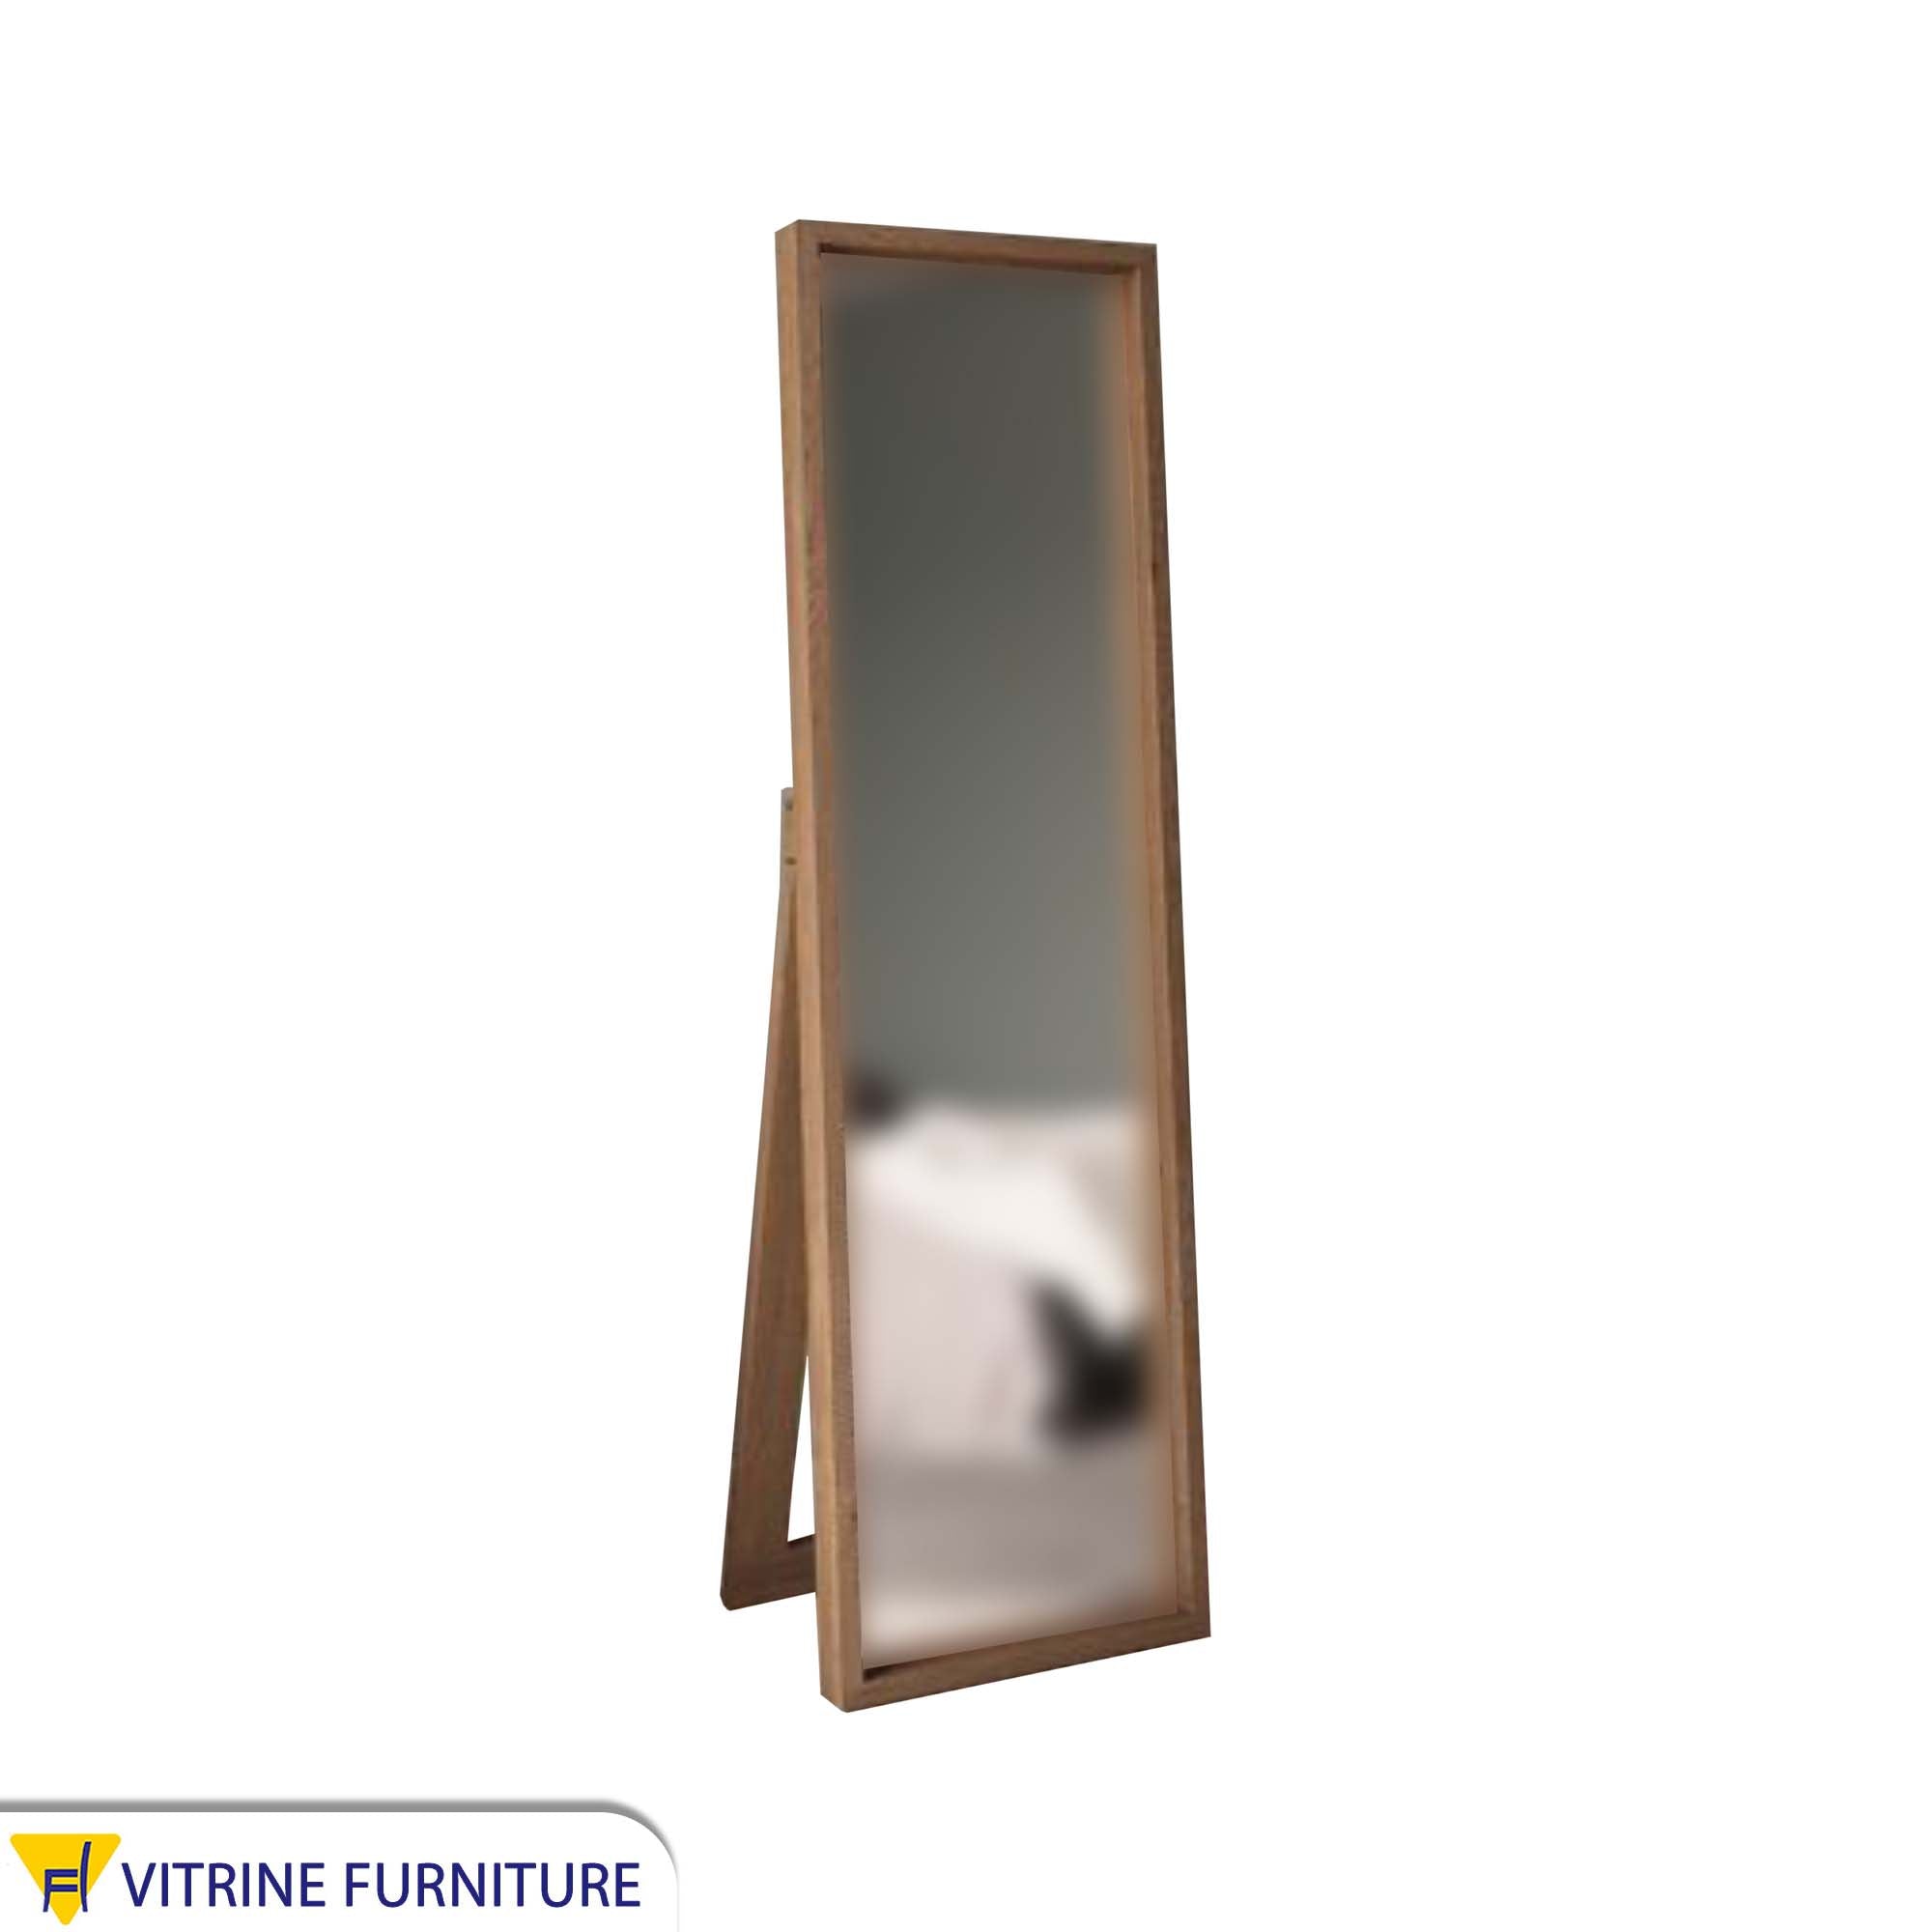 Modern rectangular mirror with wooden frame